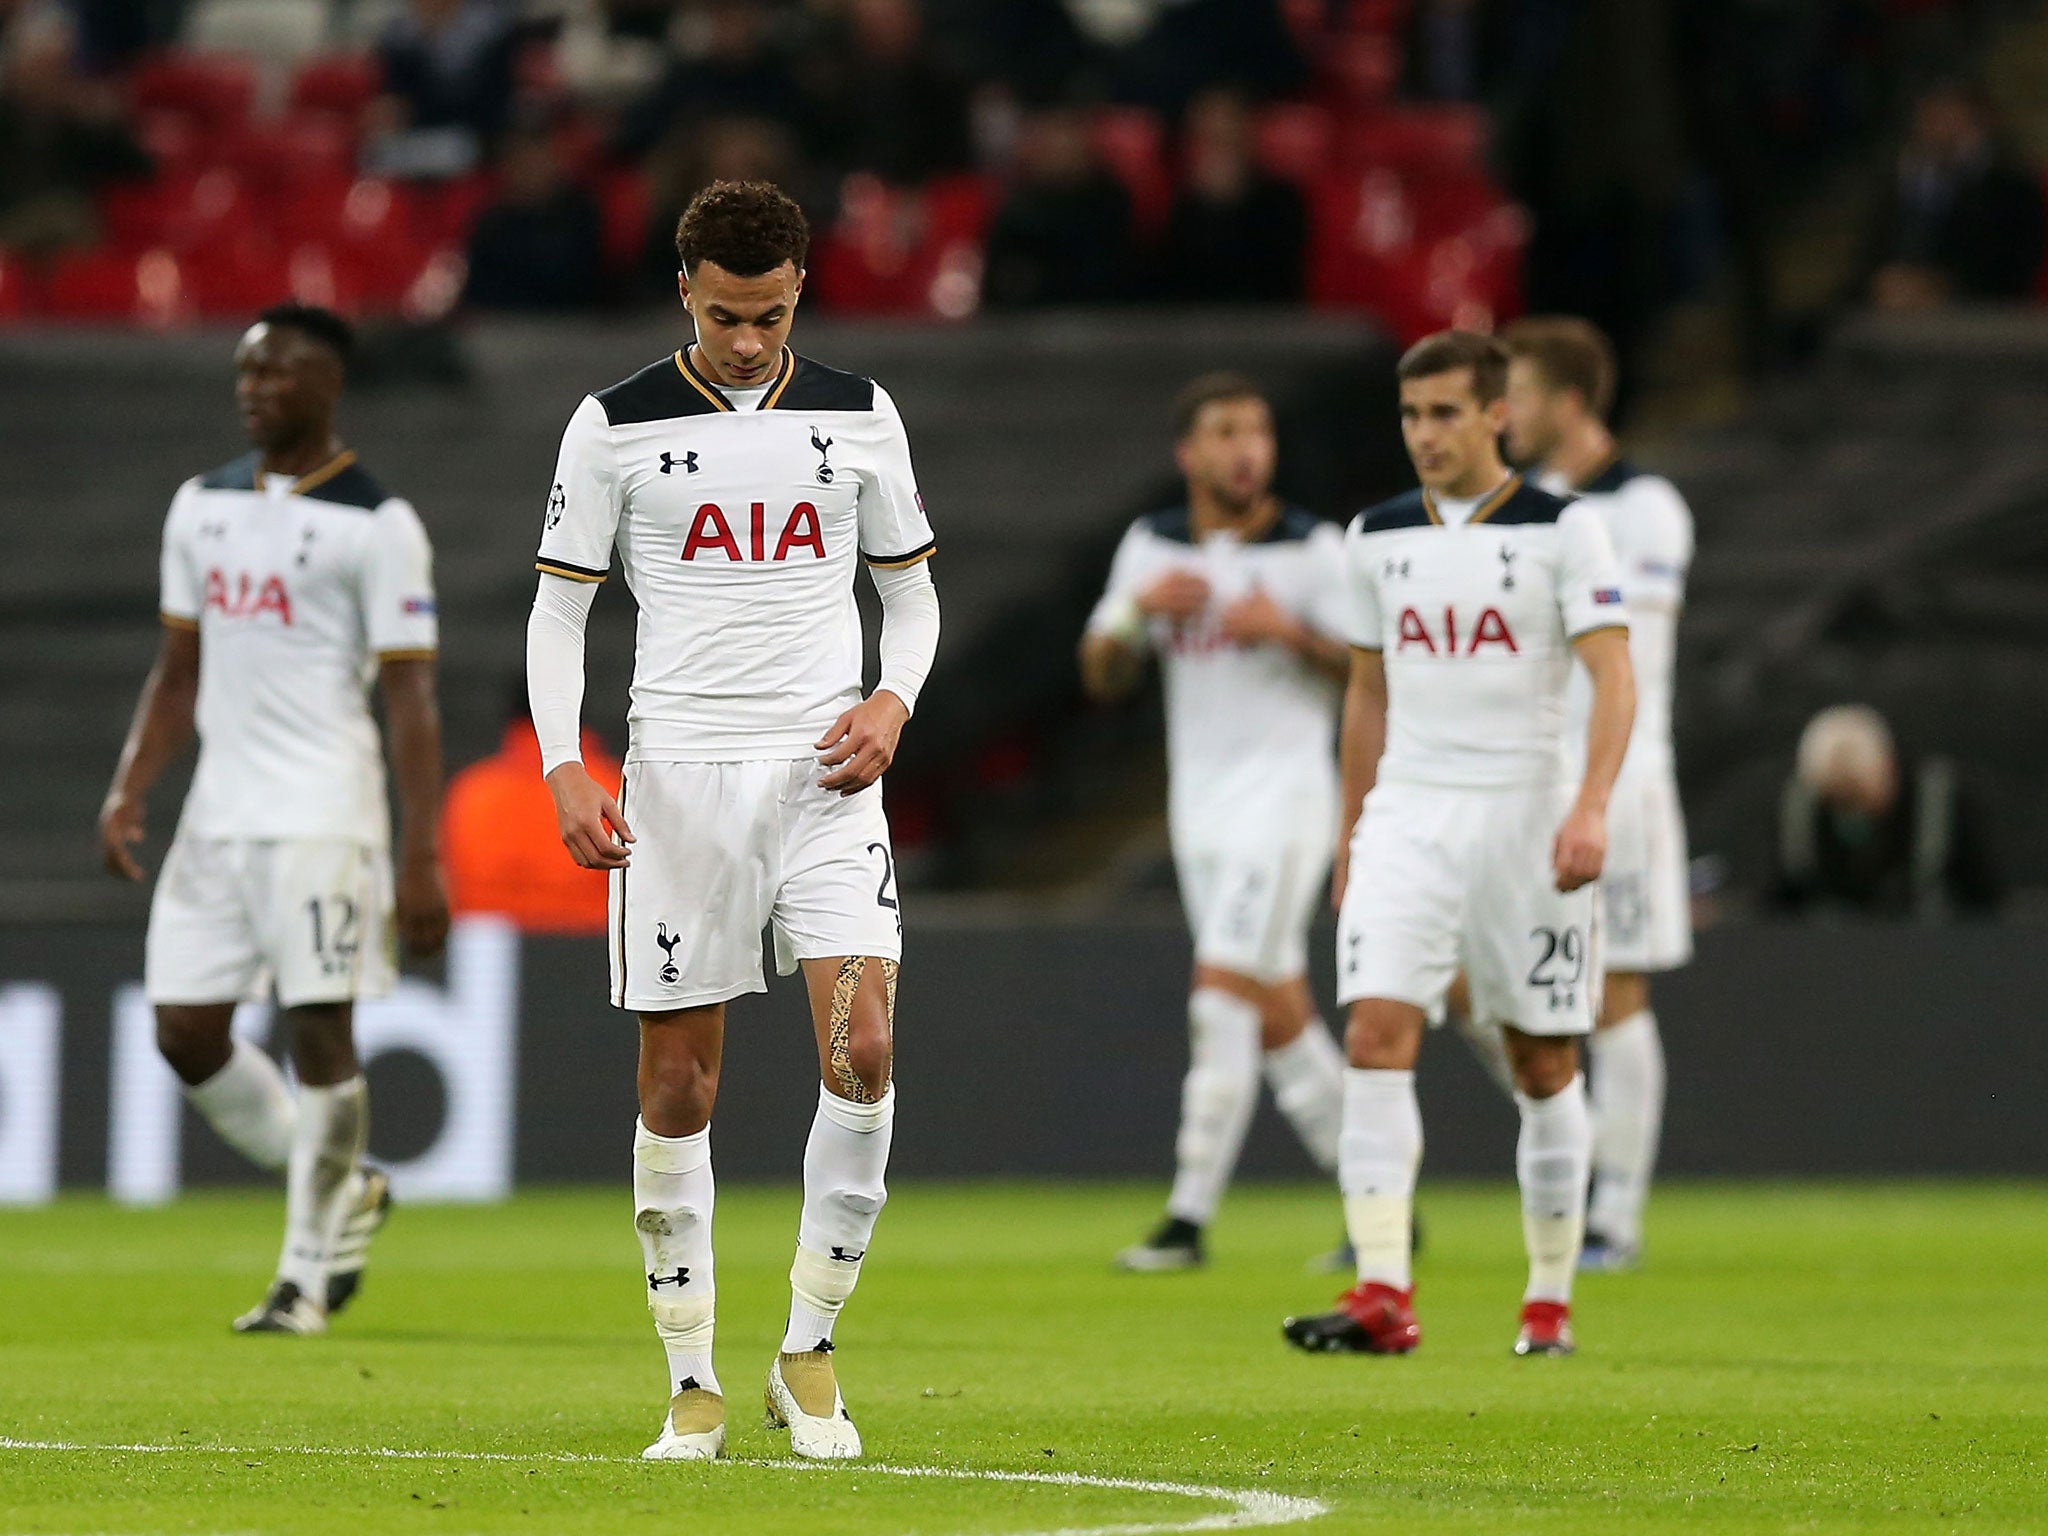 Tottenham struggled in this year's tournament